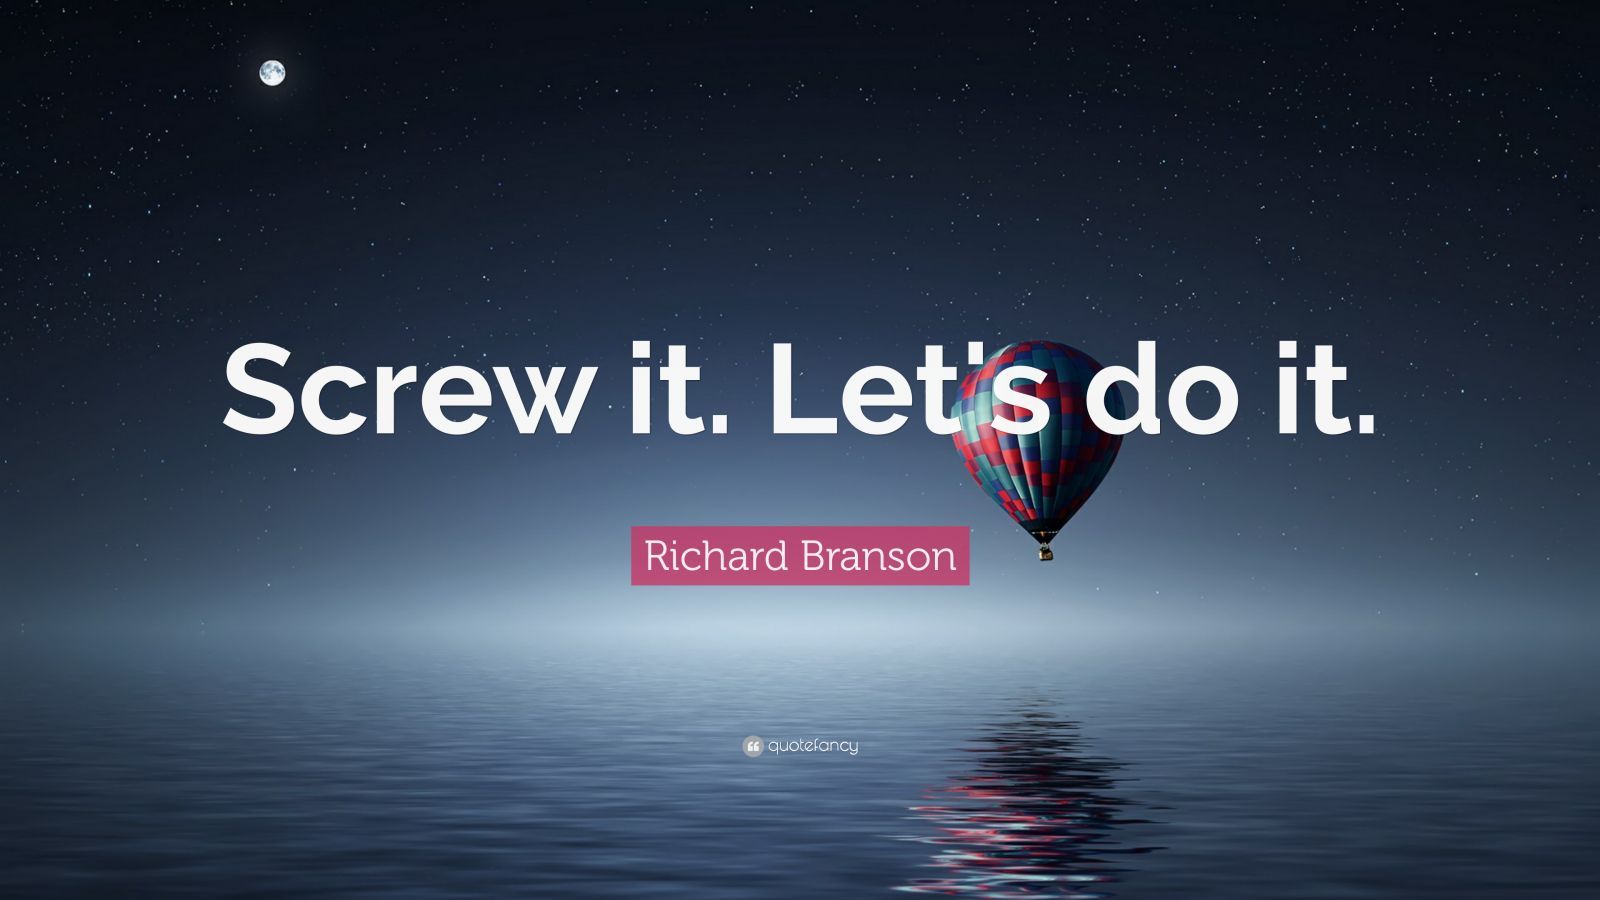 Richard Branson Quote: “Screw it. Let's do it.”